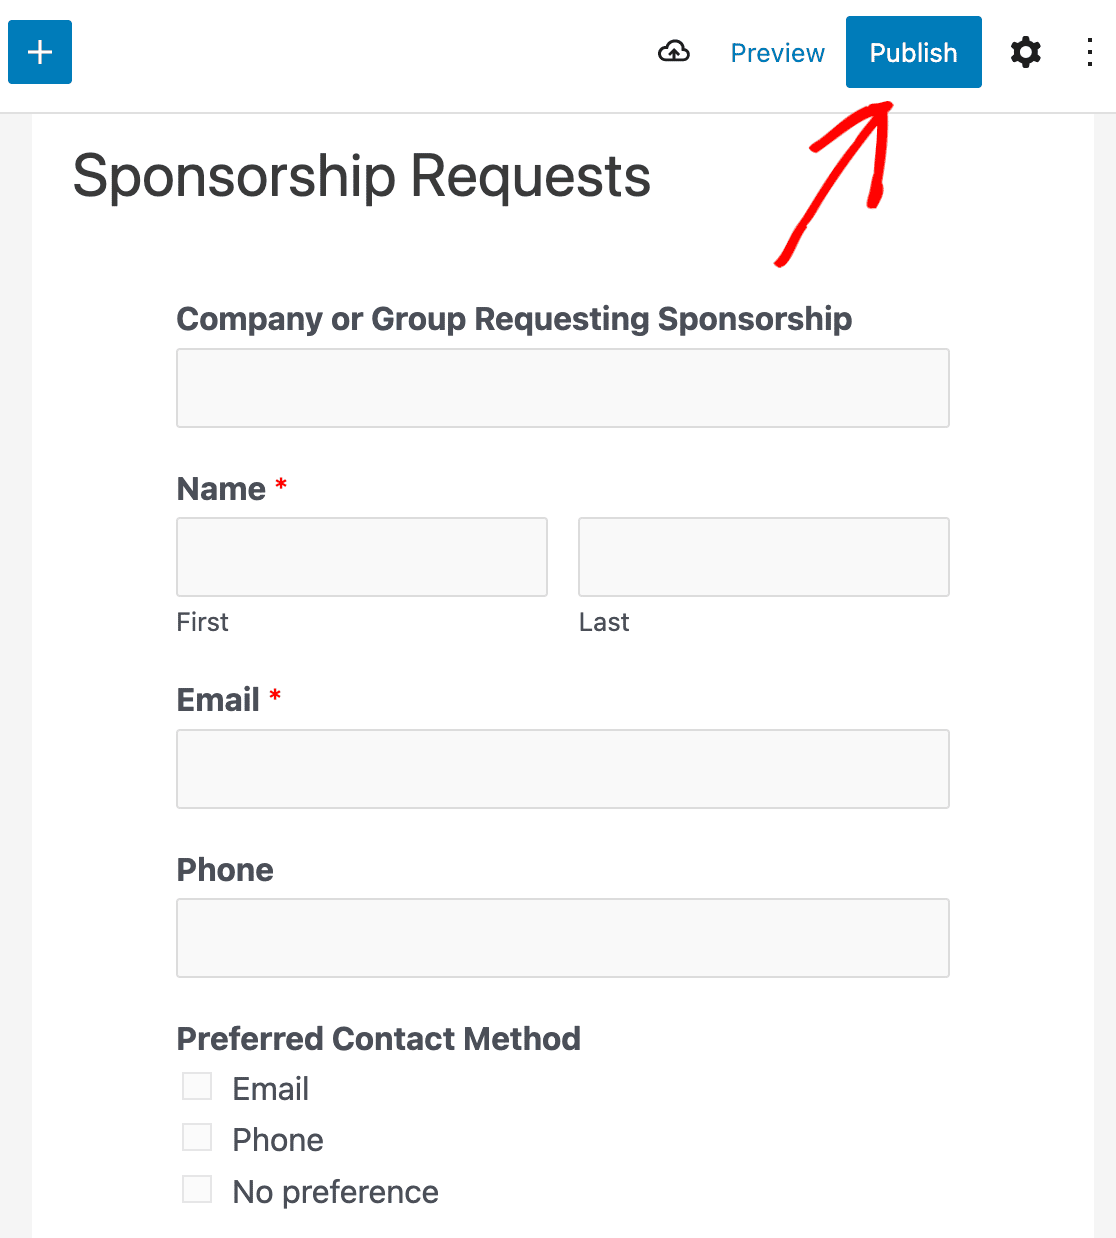 Publishing your sponsorship request form